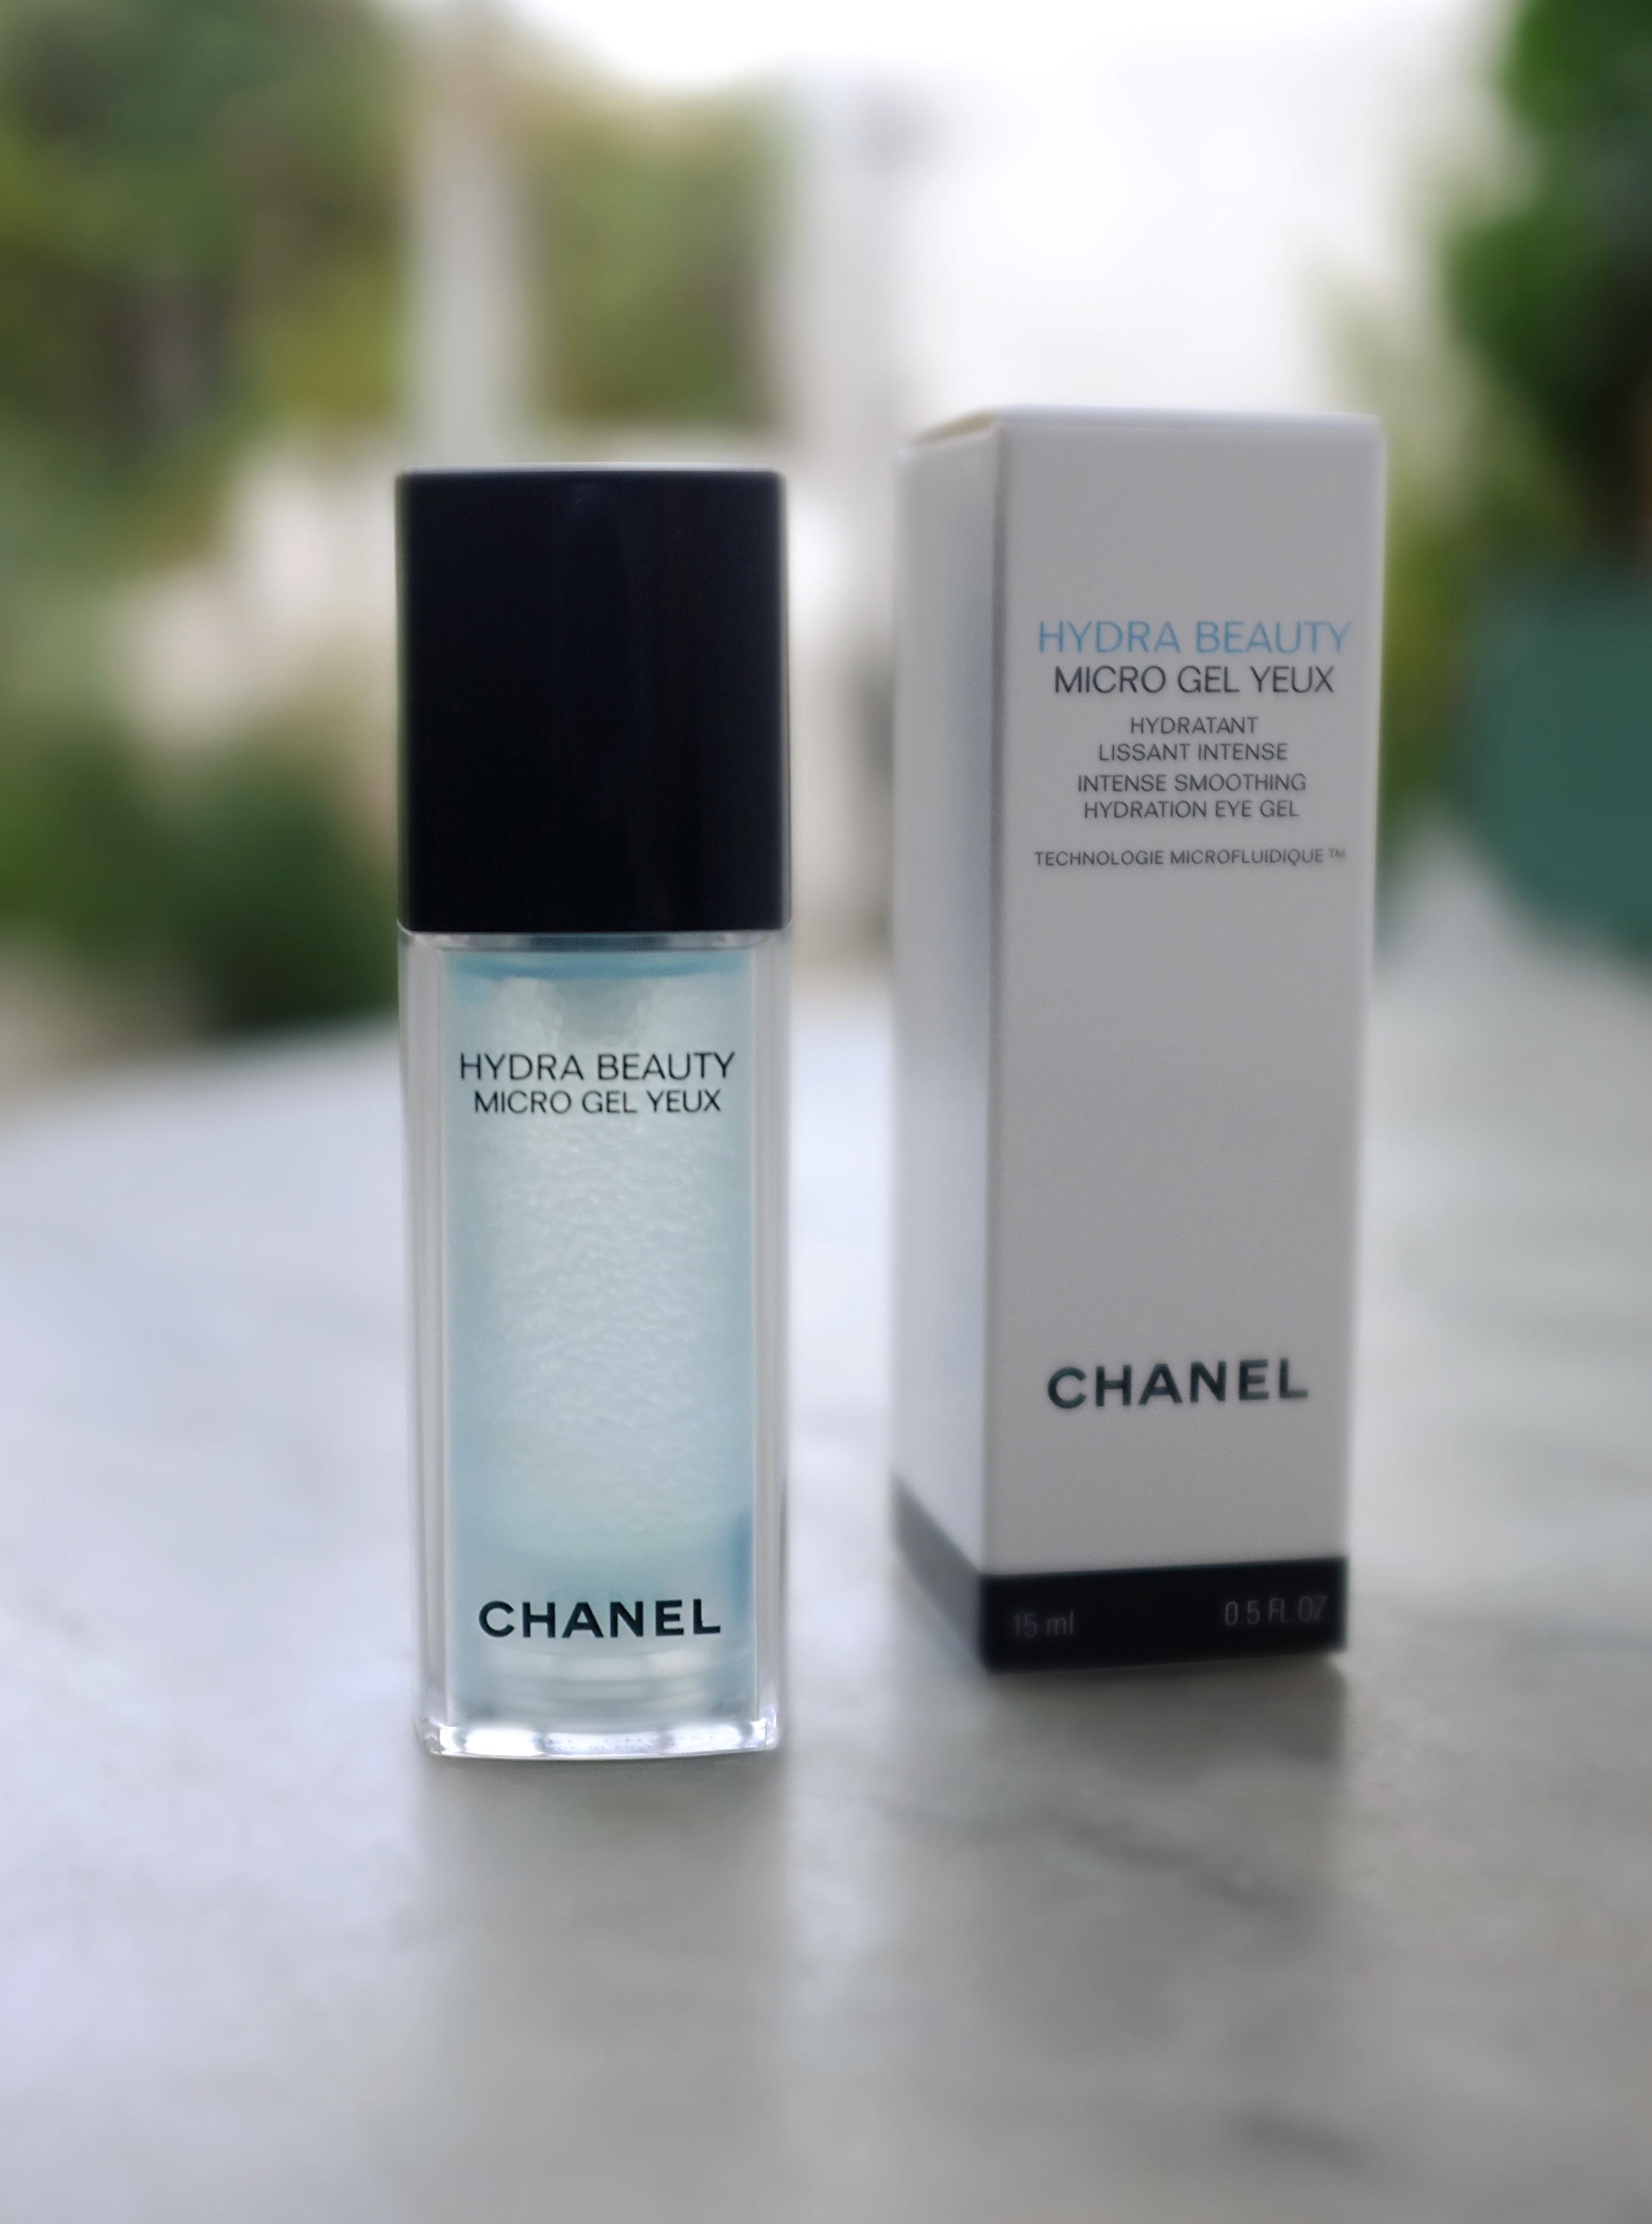 Jual SALE Chanel hydra beauty micro gel yeux INTENSE SMOOTHING HYDRATION -  Jakarta Selatan - Vikttorie